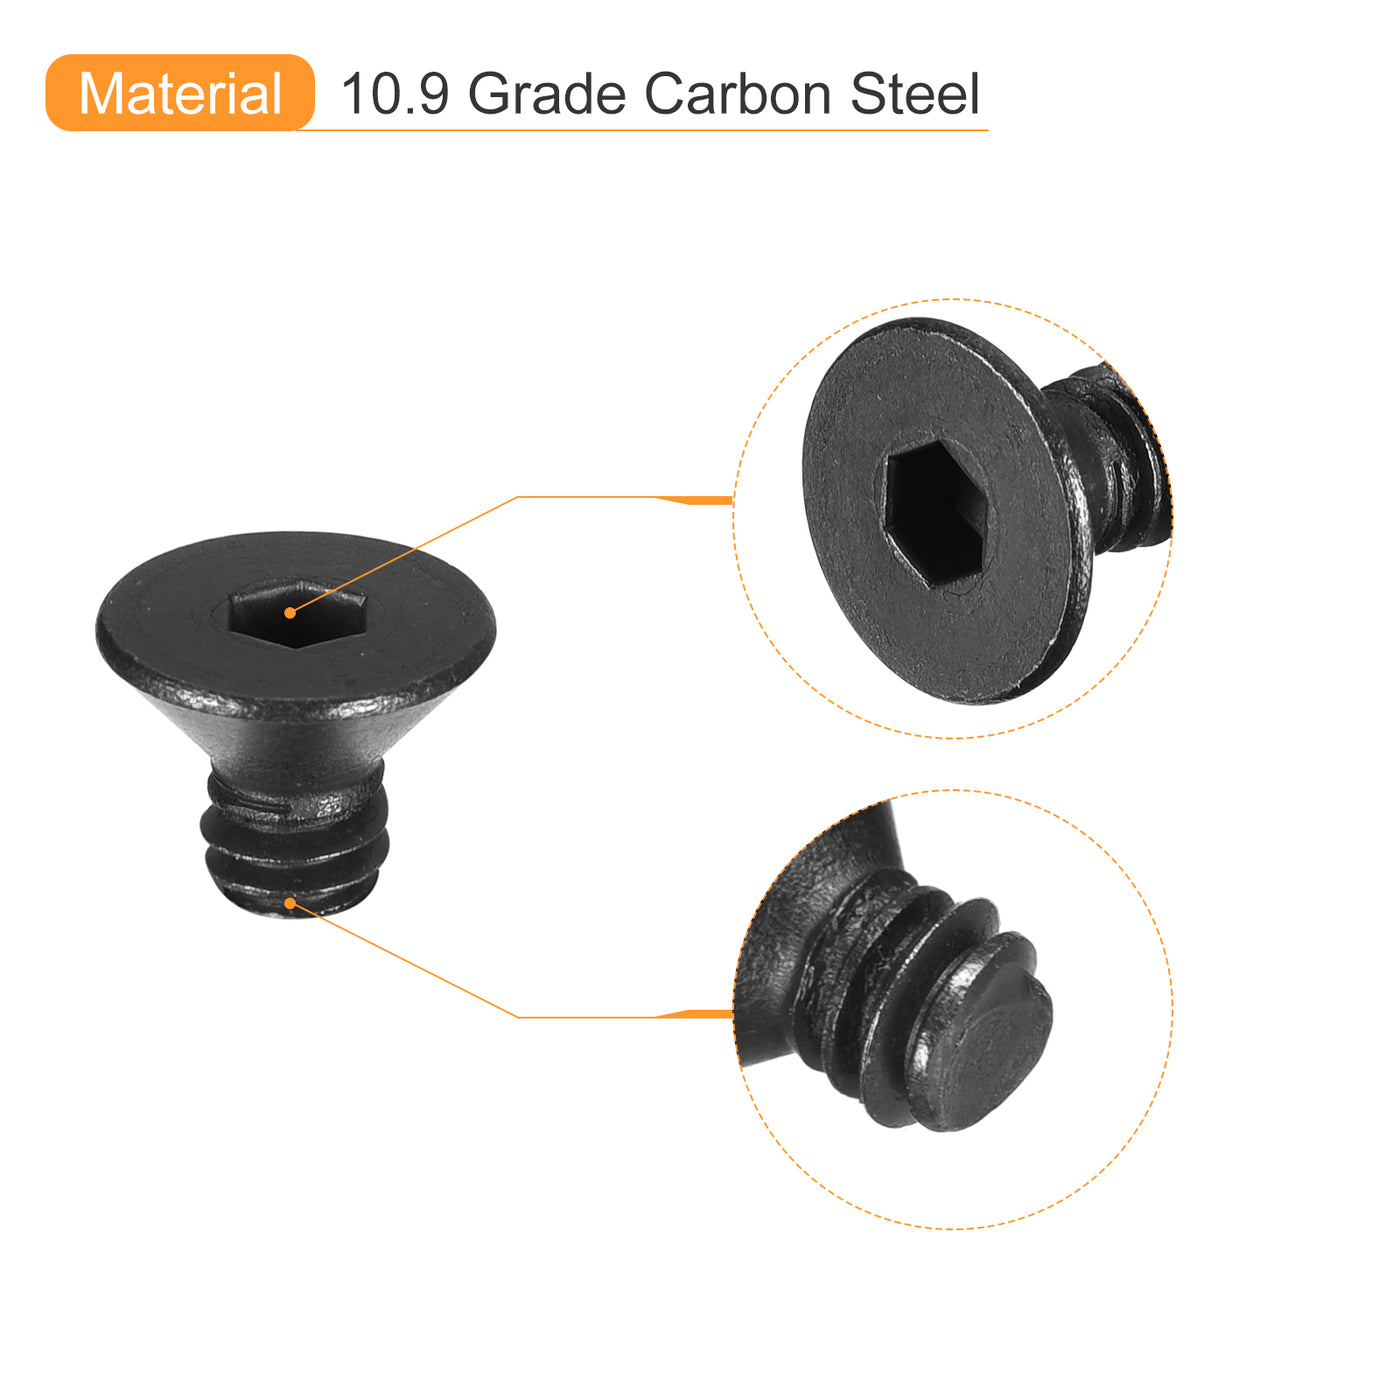 uxcell Uxcell 1/4-20x3/8" Flat Head Socket Cap Screws, 10.9 Grade Carbon Steel, 20PCS